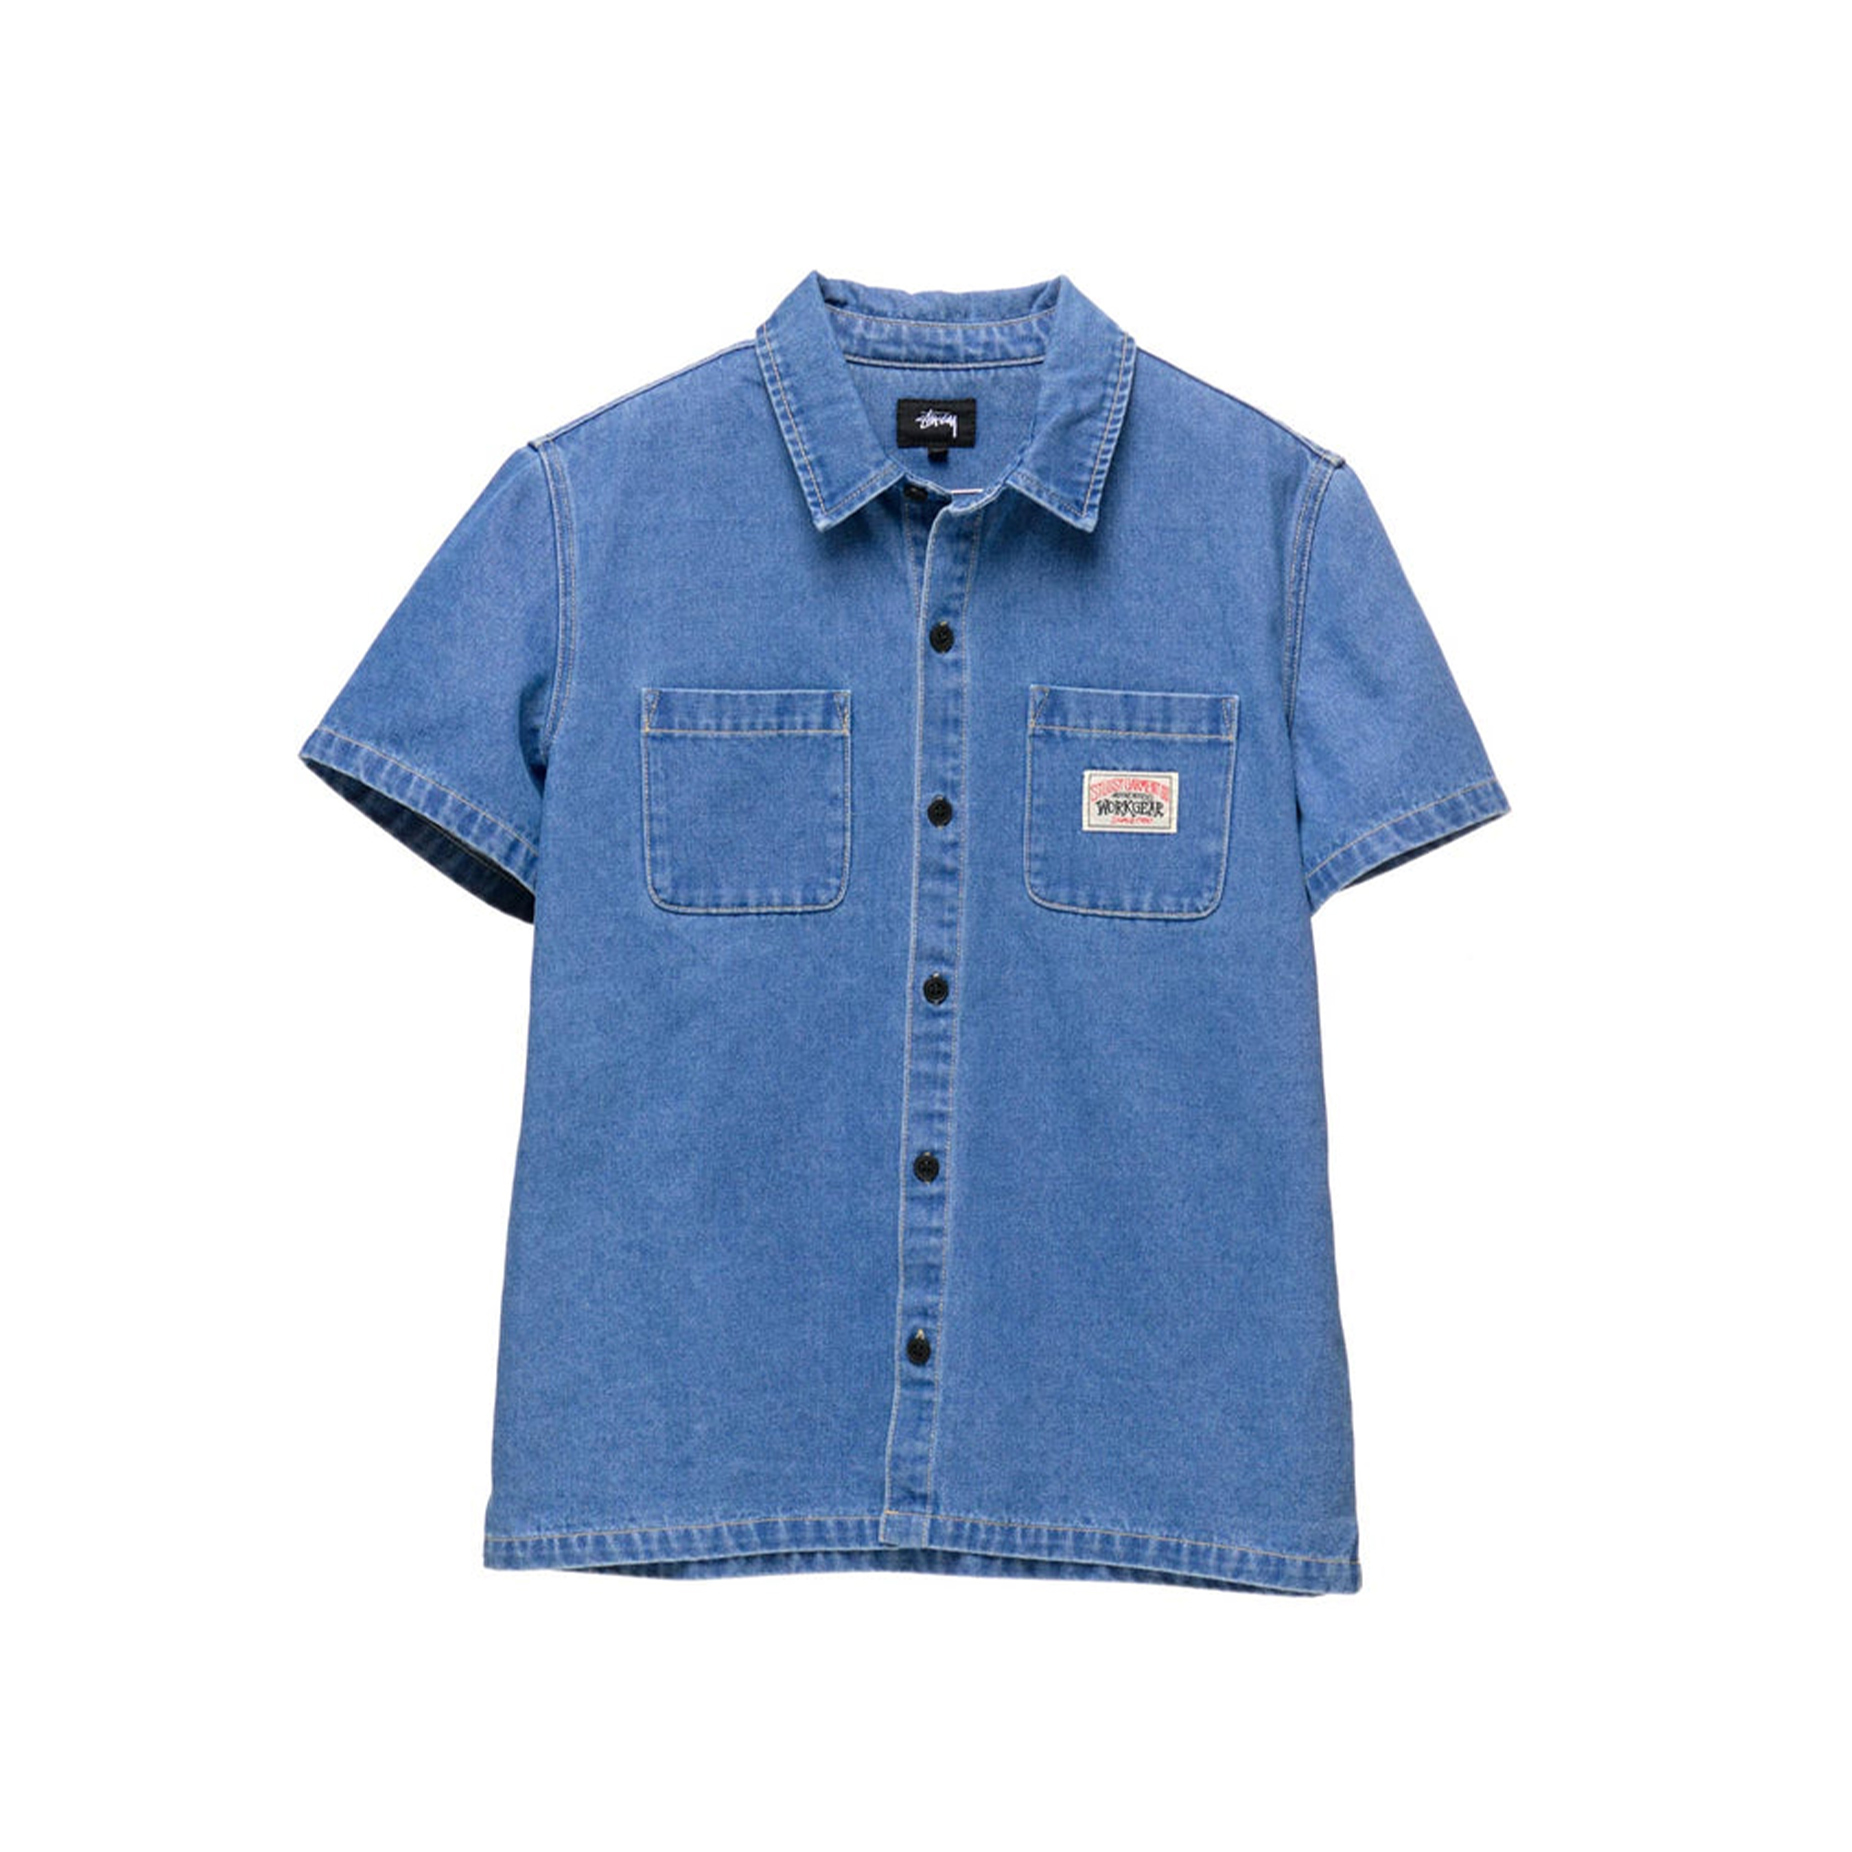 Stussy Workgear Denim Shirt - Mid Blue | BOARDWORLD Store